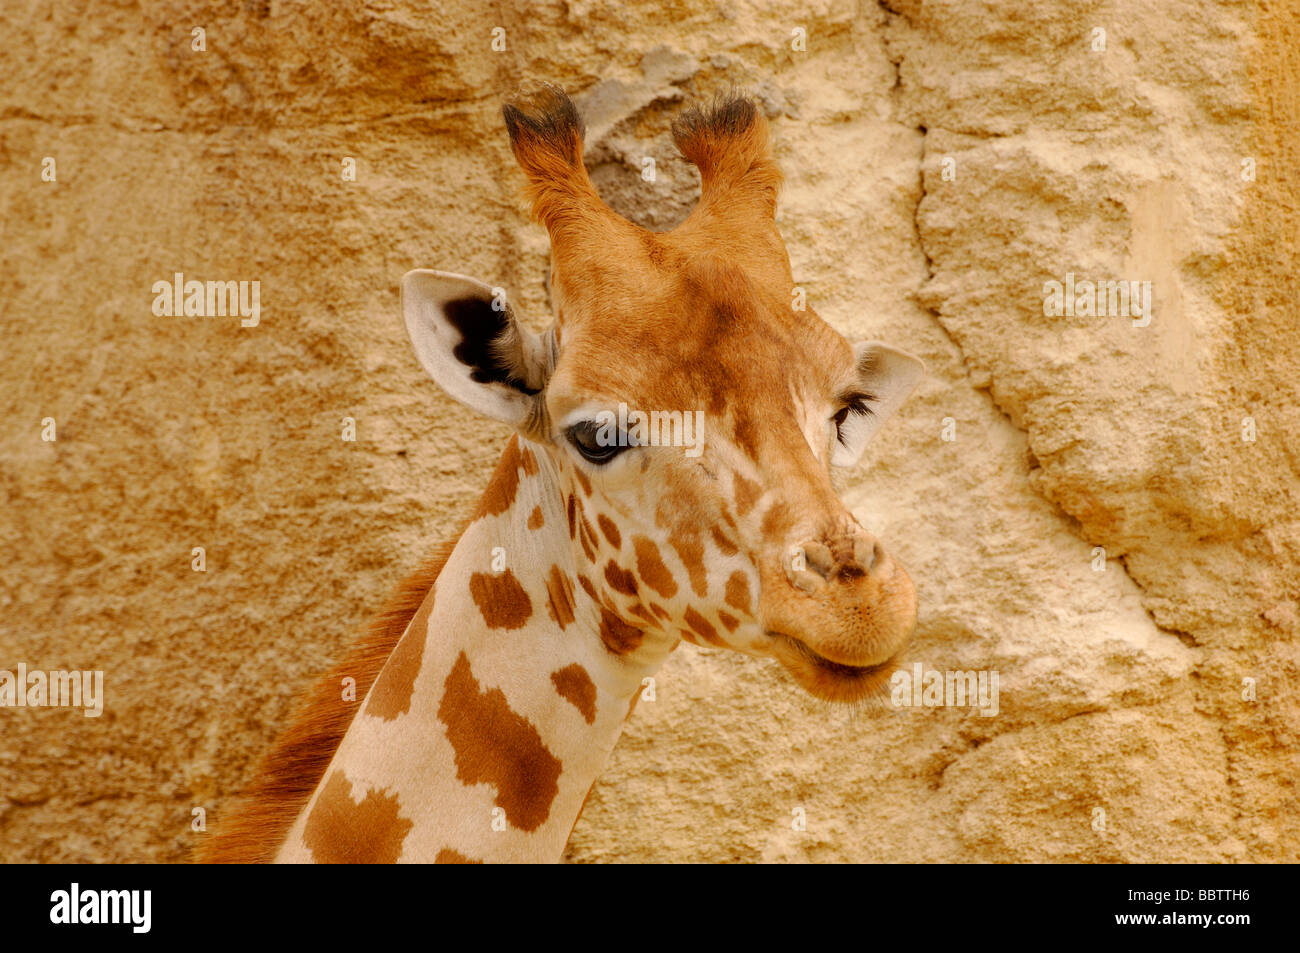 África Occidental nigeriano o jirafa Giraffa camelopardalis Peralta en peligro Foto de stock